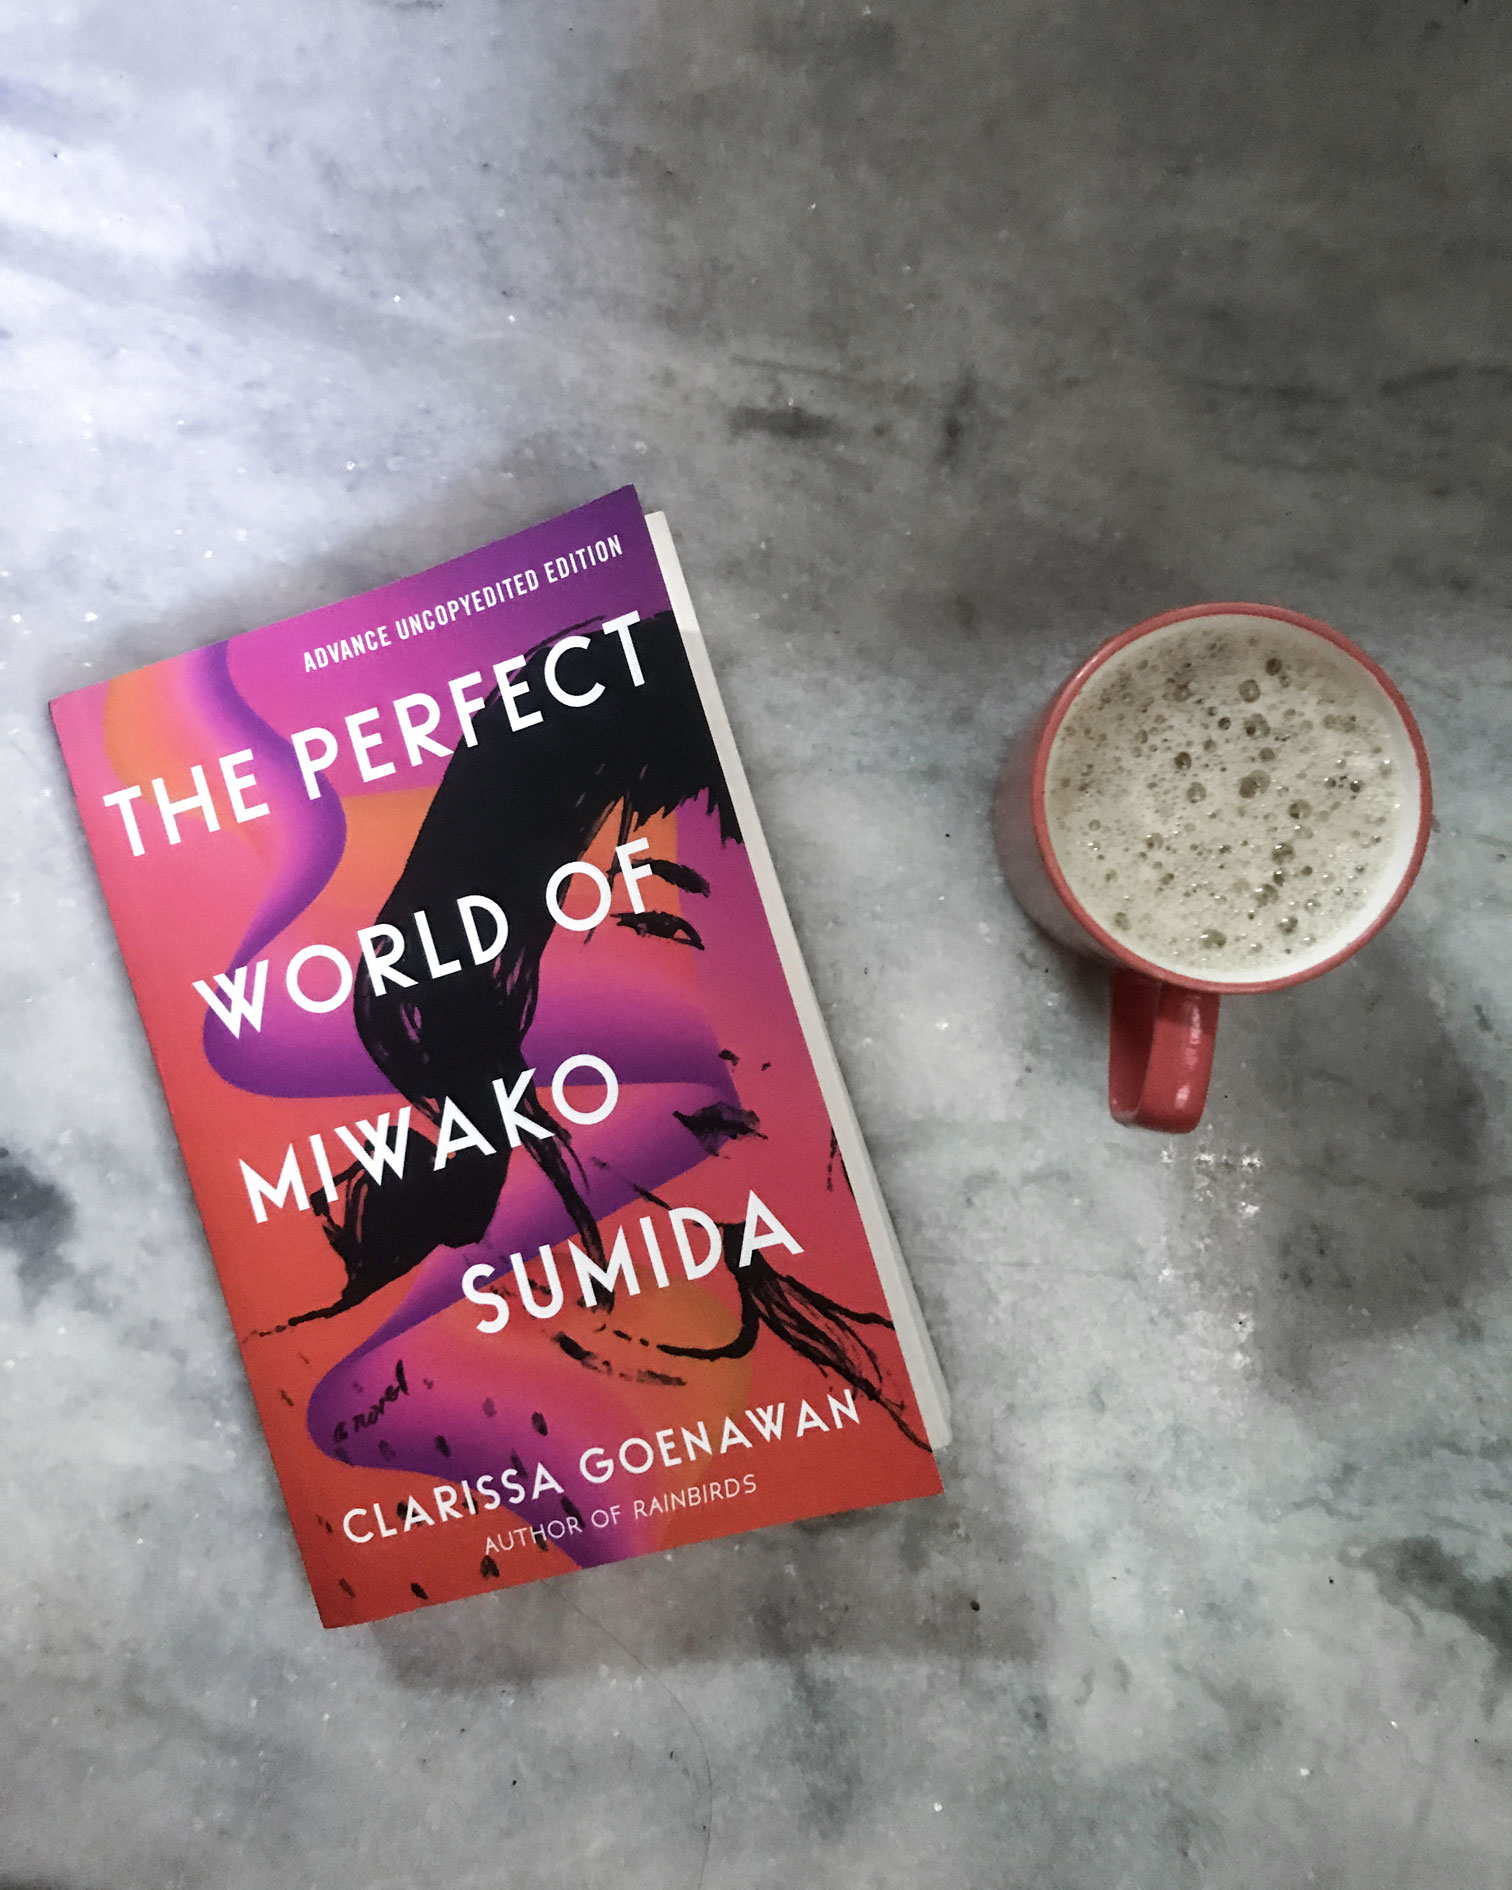 Book Review The Perfect World By Miwako Sumida By Clarissa Goenawan